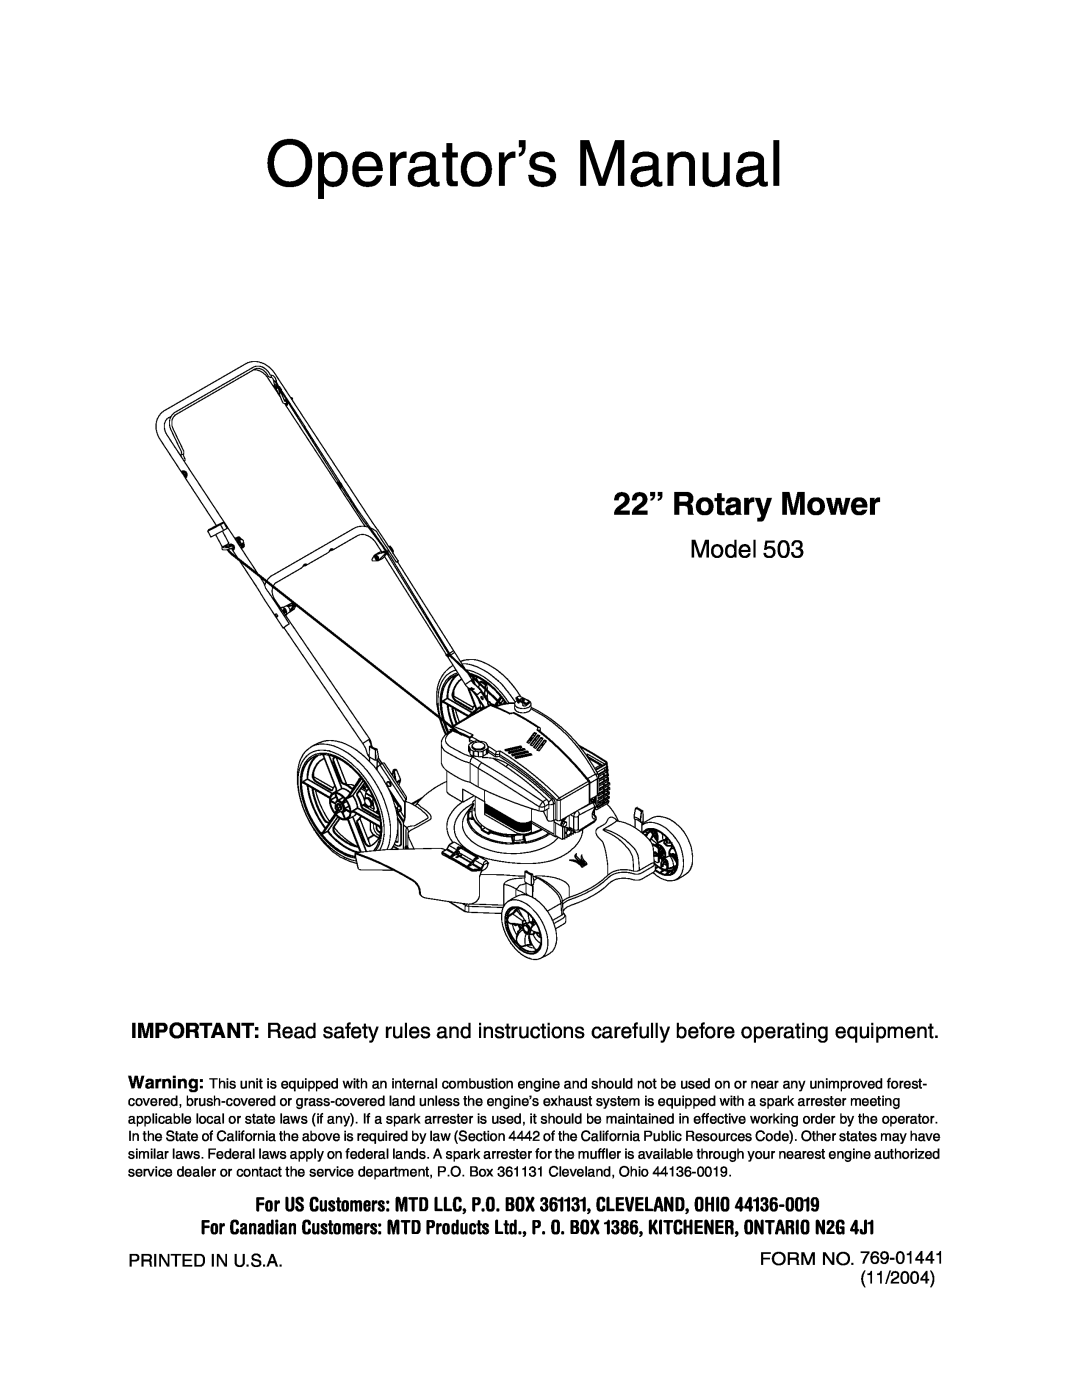 MTD 503 manual Operator’s Manual, 22” Rotary Mower, Model, For US Customers MTD LLC, P.O. BOX 361131, CLEVELAND, OHIO 